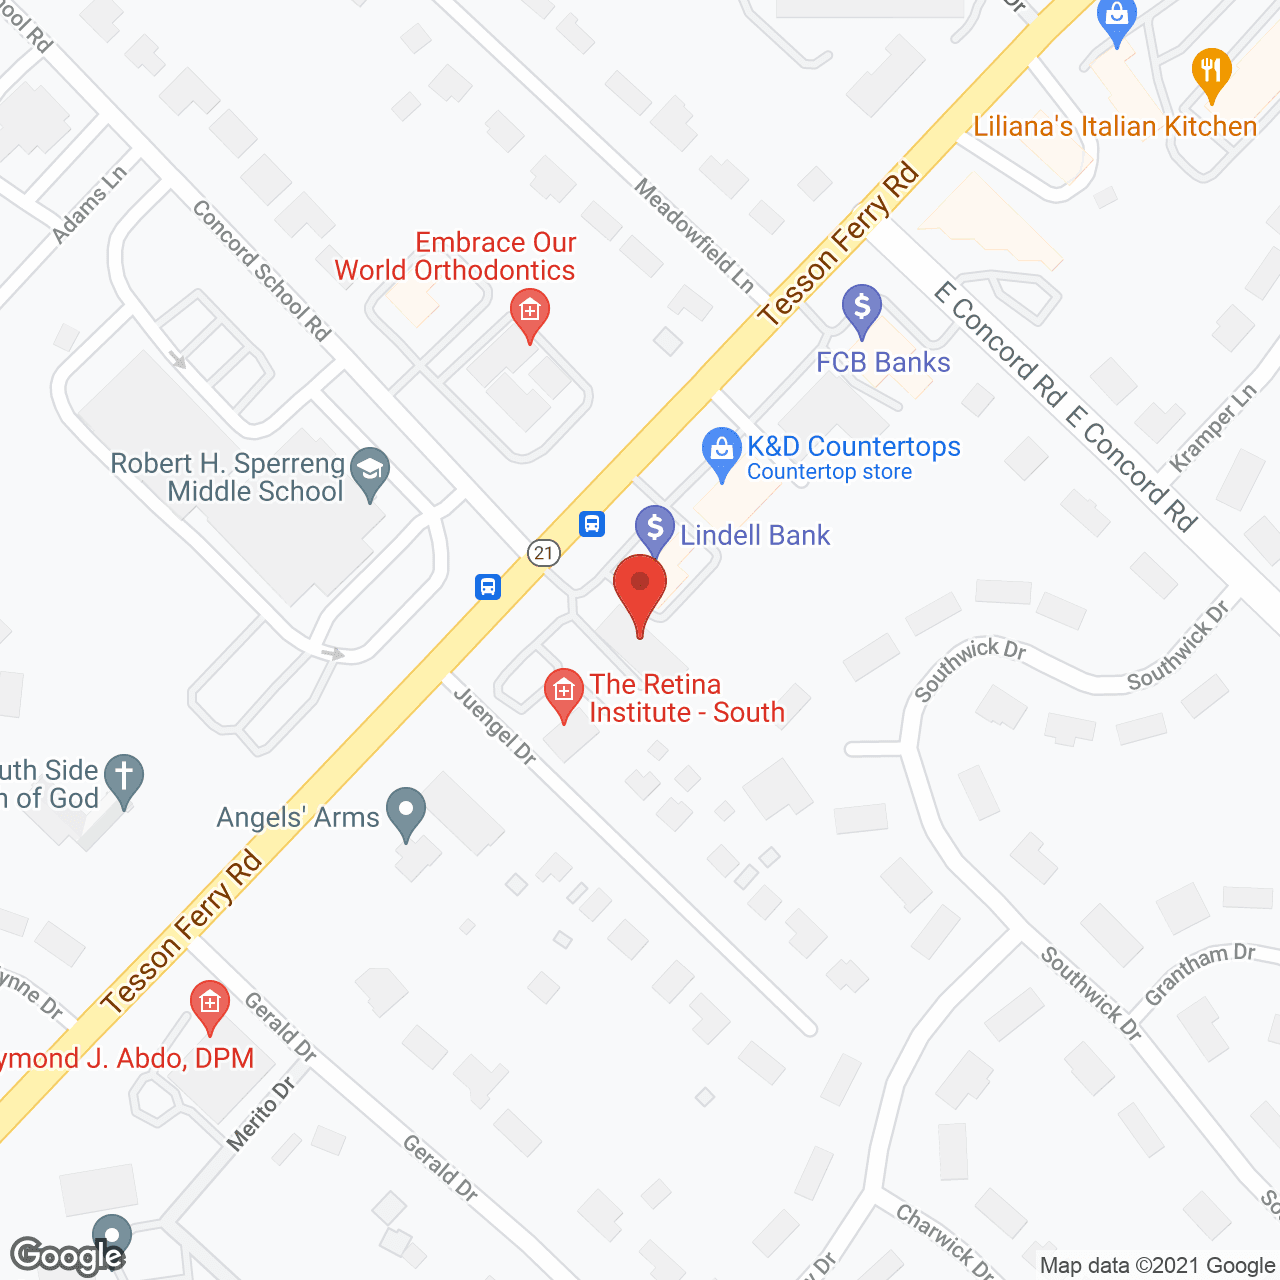 BAYADA Home Health Care - Saint Louis in google map